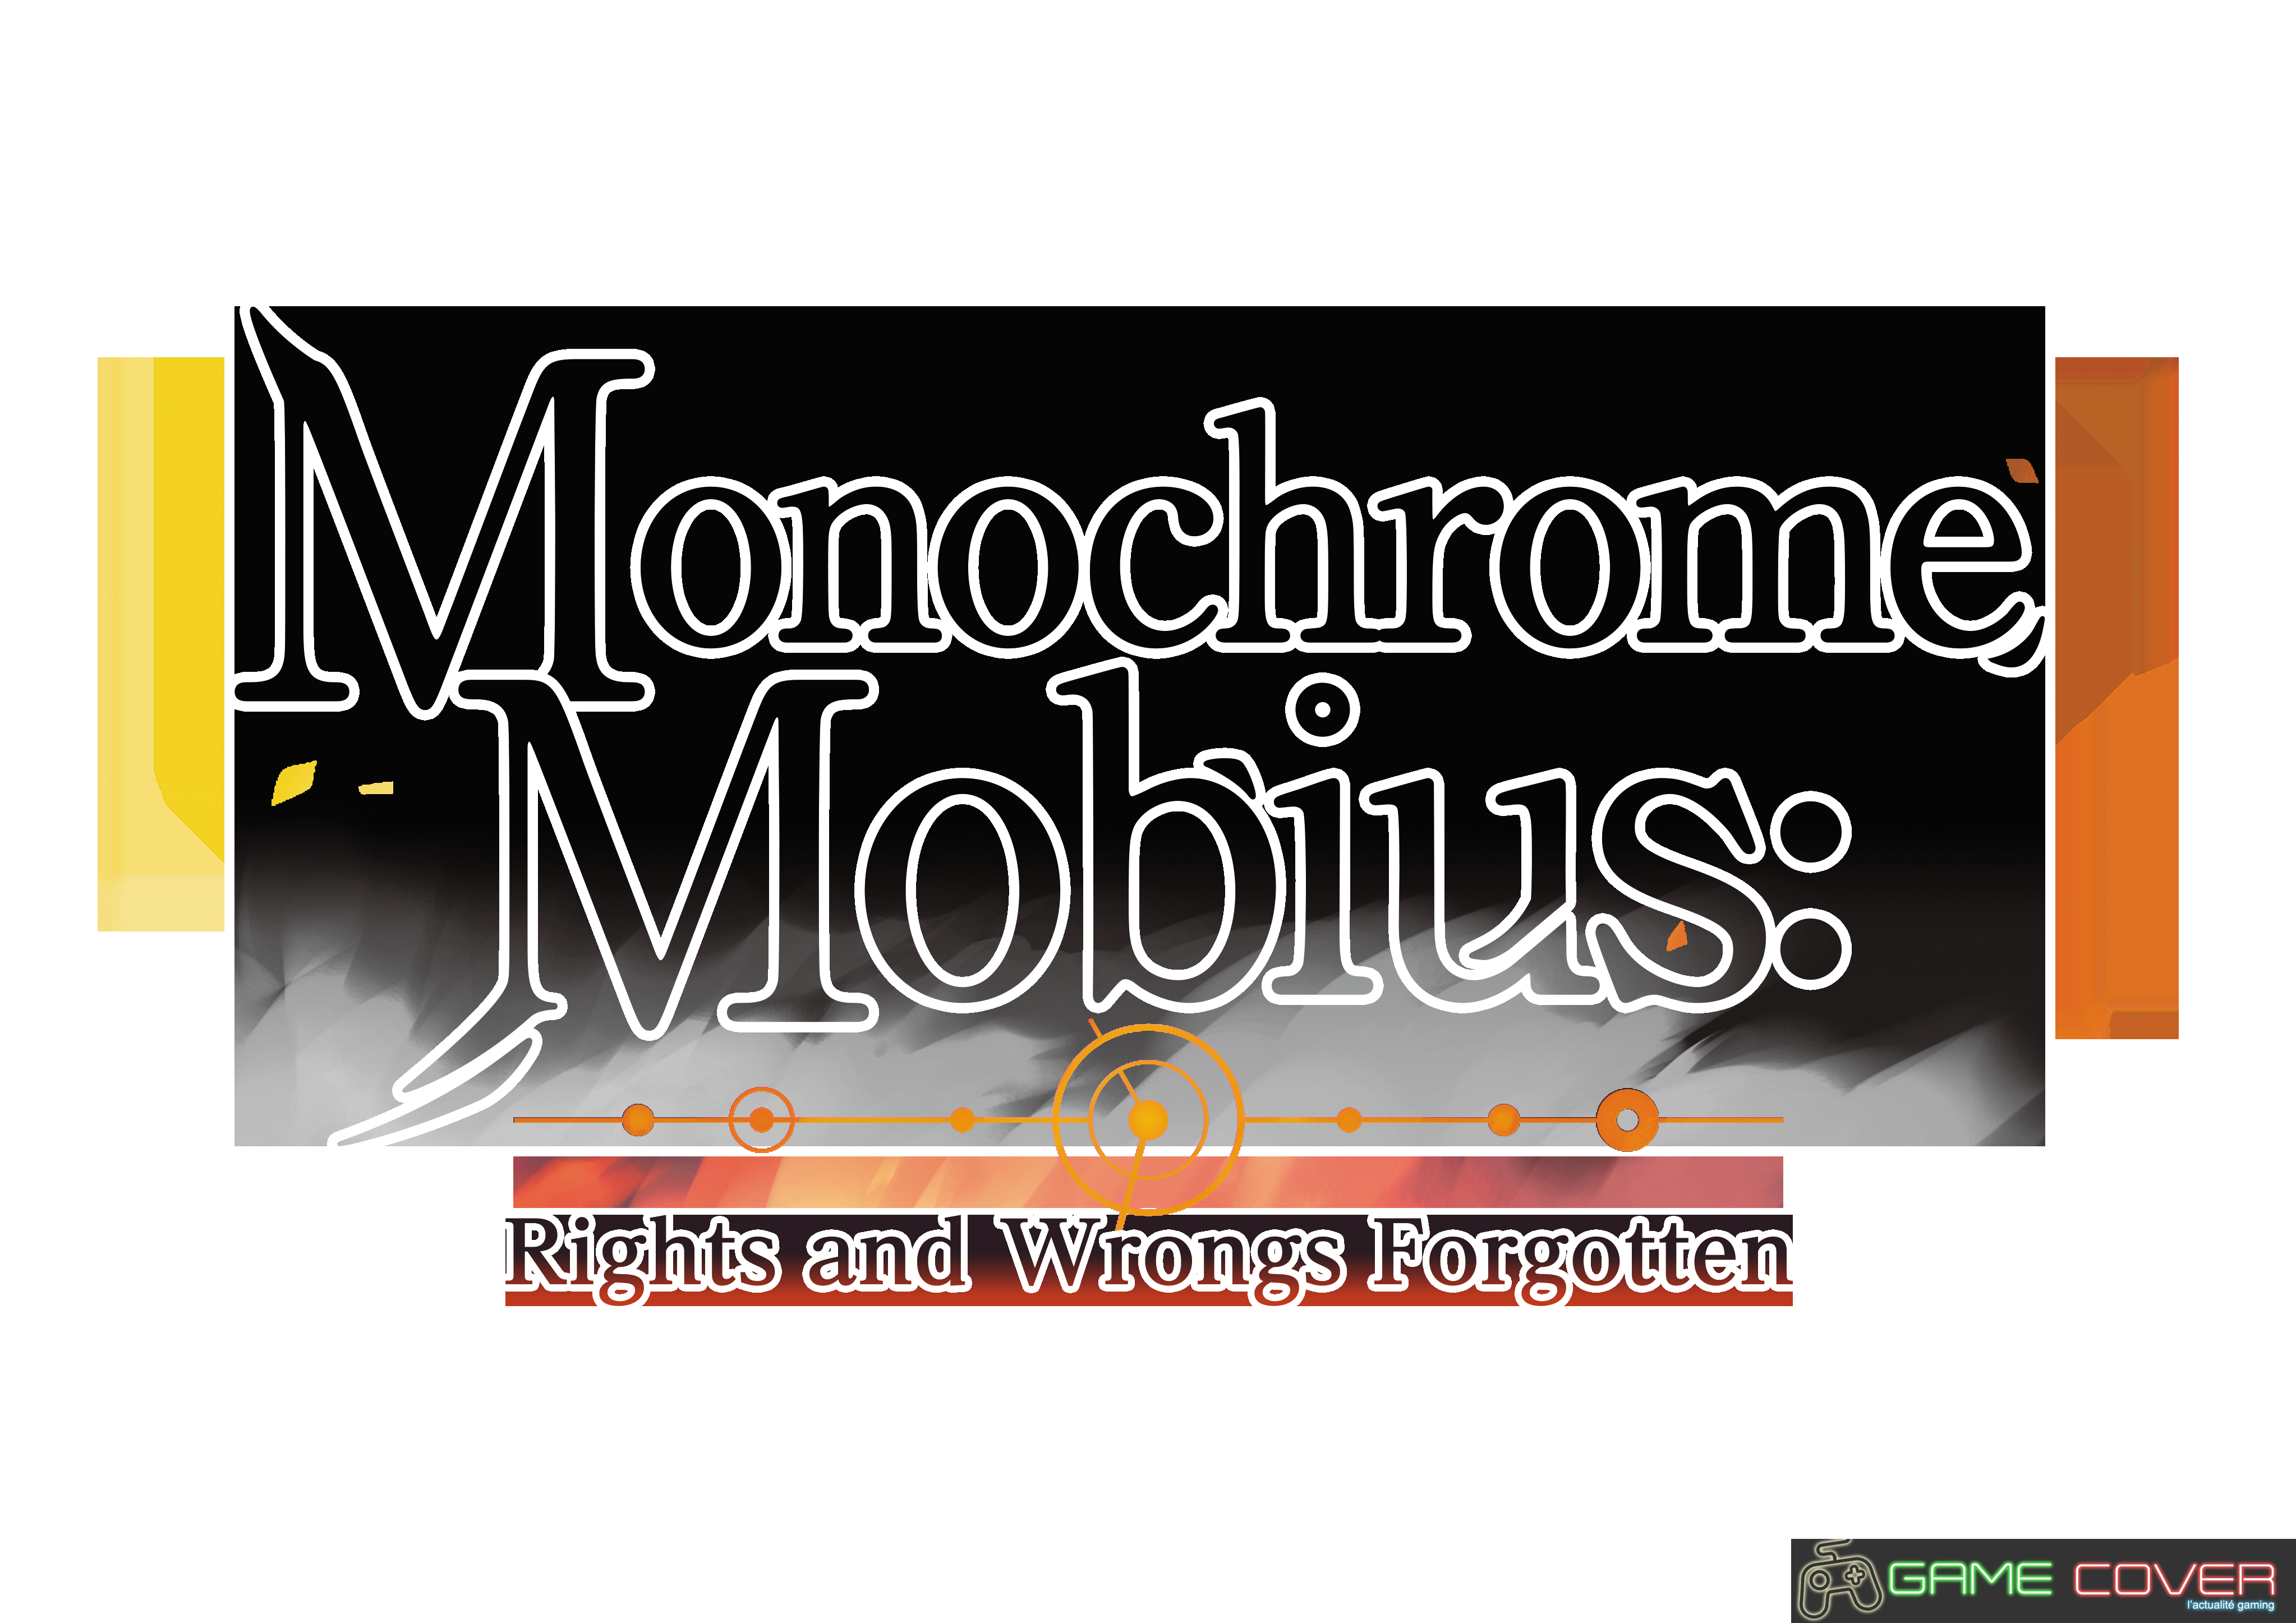 Monochrome Mobius